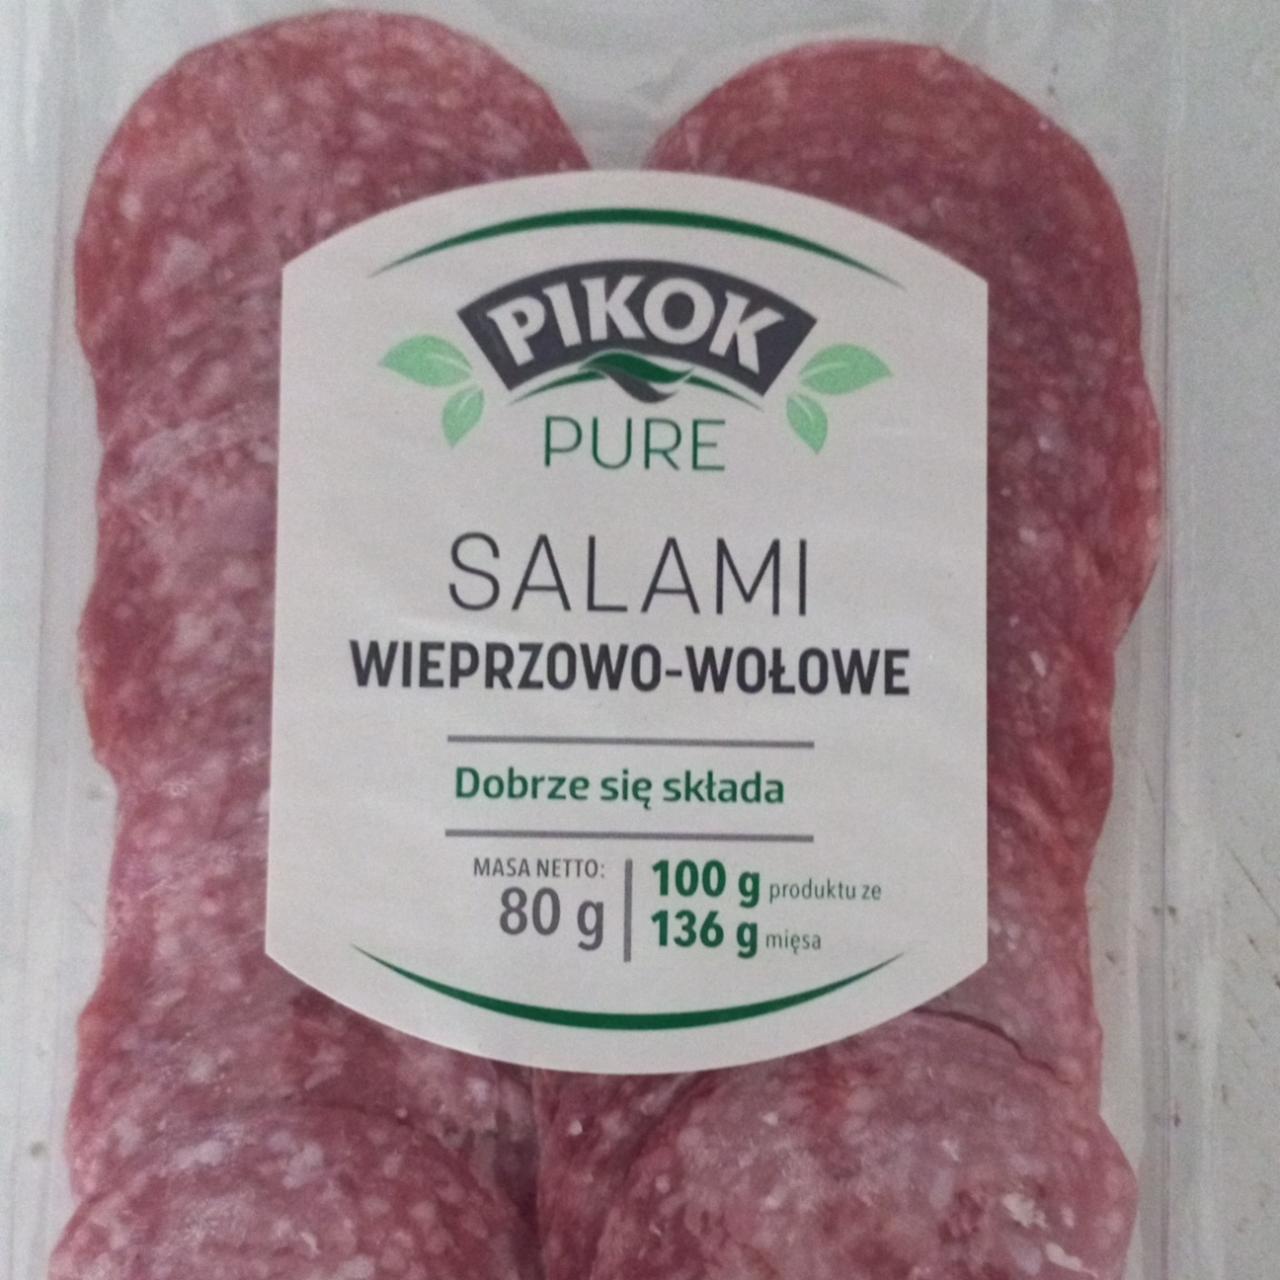 Fotografie - Salami wieprzowo-wolowe Pikok Pure